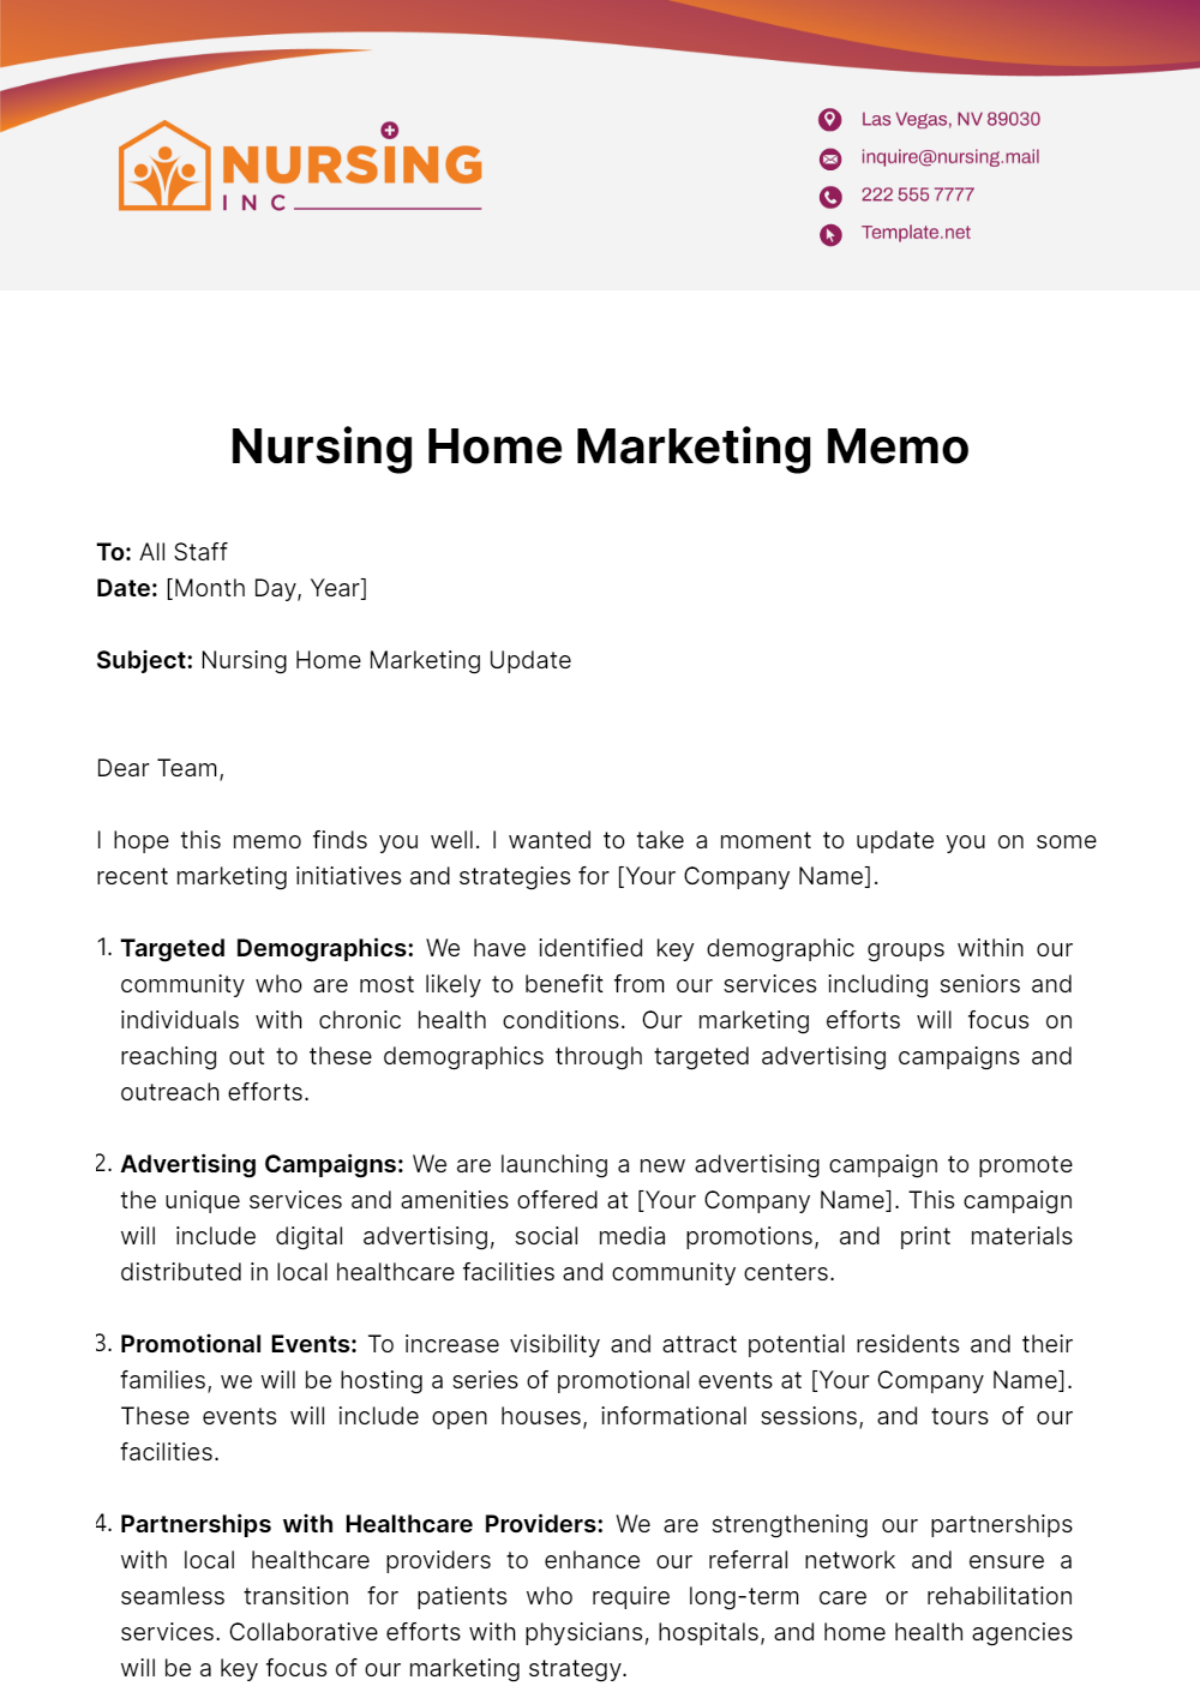 Nursing Home Marketing Memo Template